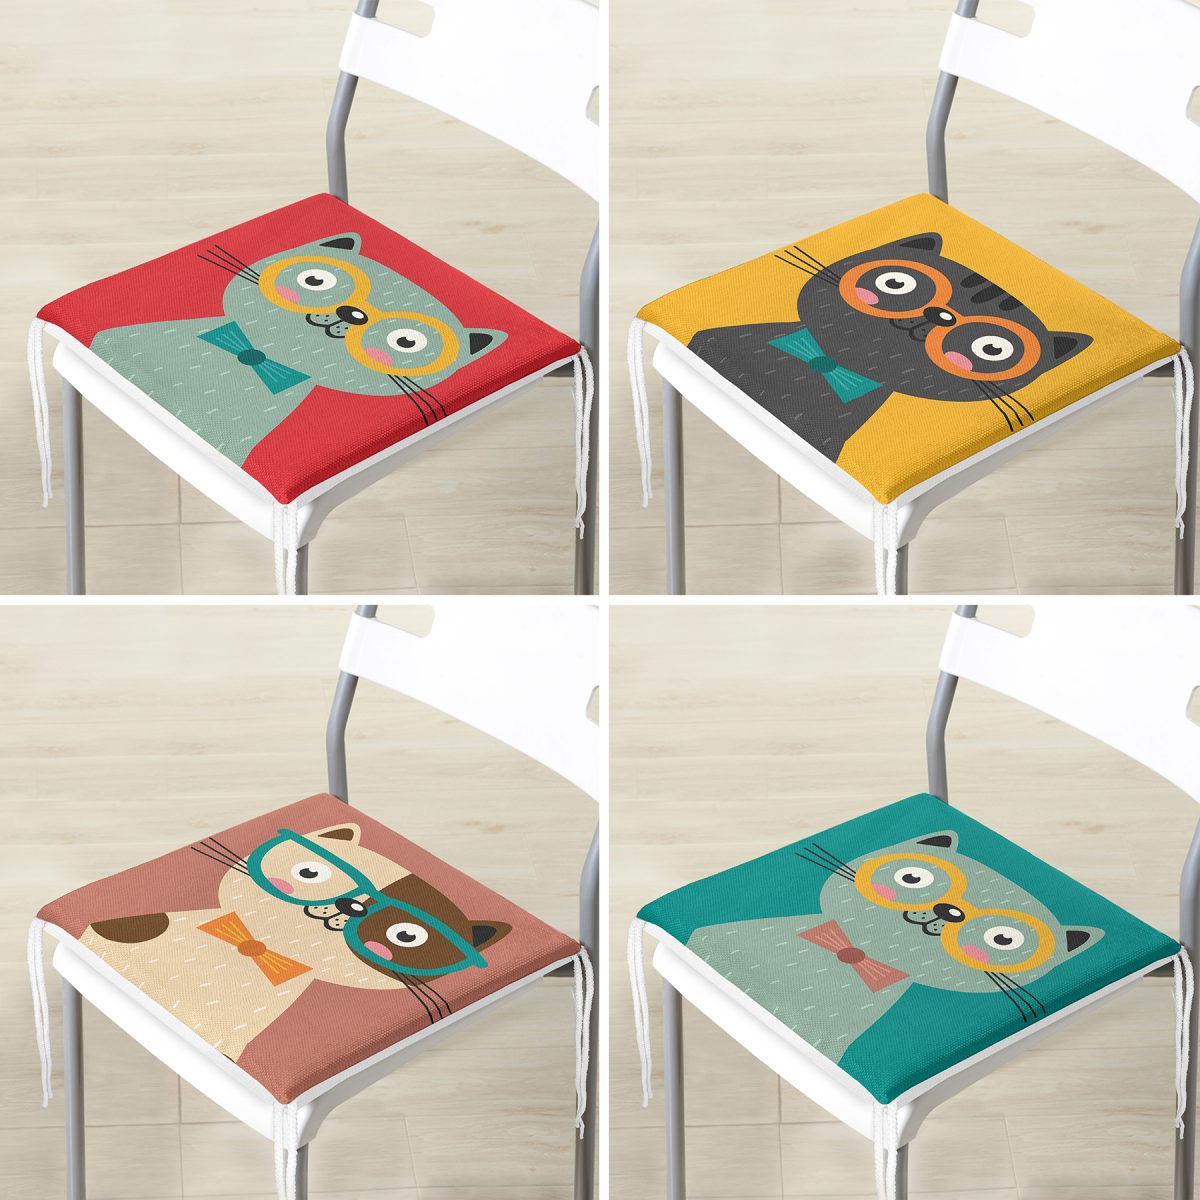 4'lü Renkli Sevimli Kedicik Baskılı Fermuarlı Sandalye Minderi Seti Realhomes